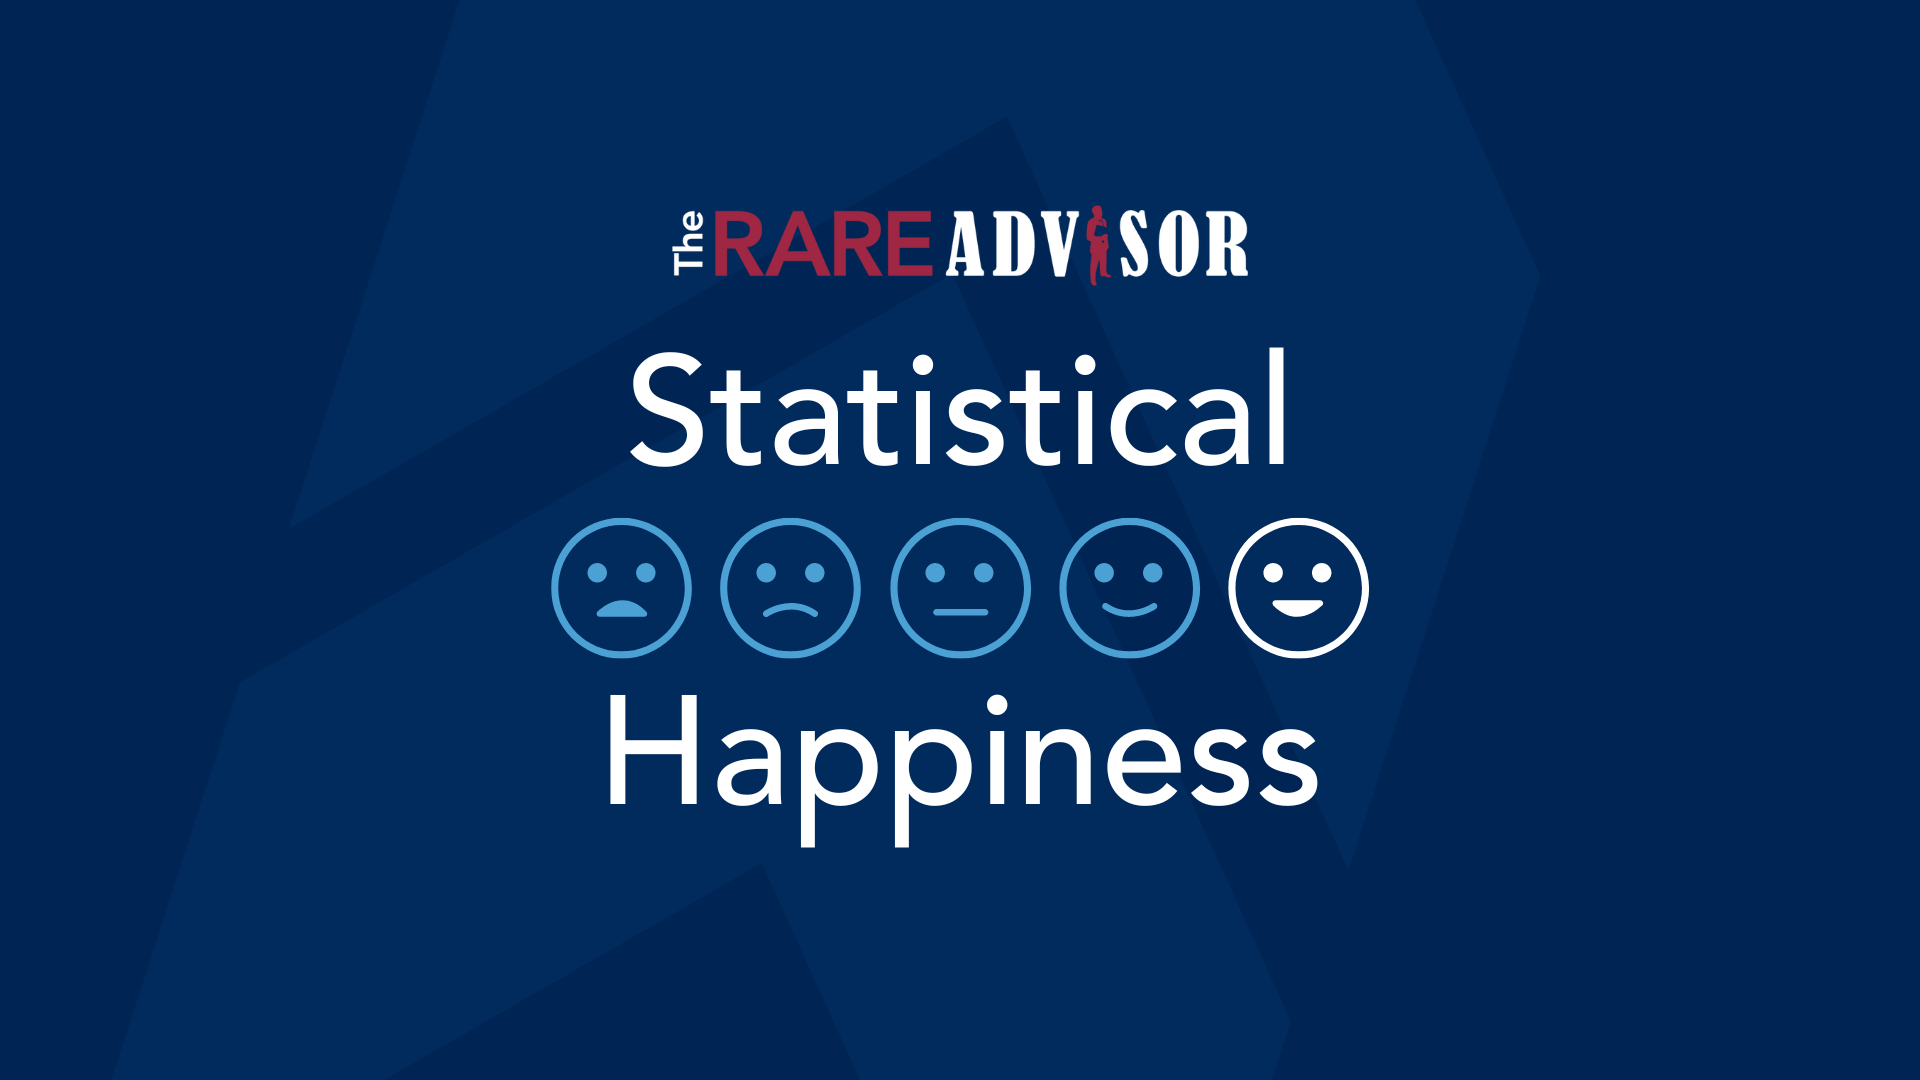 The RARE Advisor: Achieve Statistical Happiness